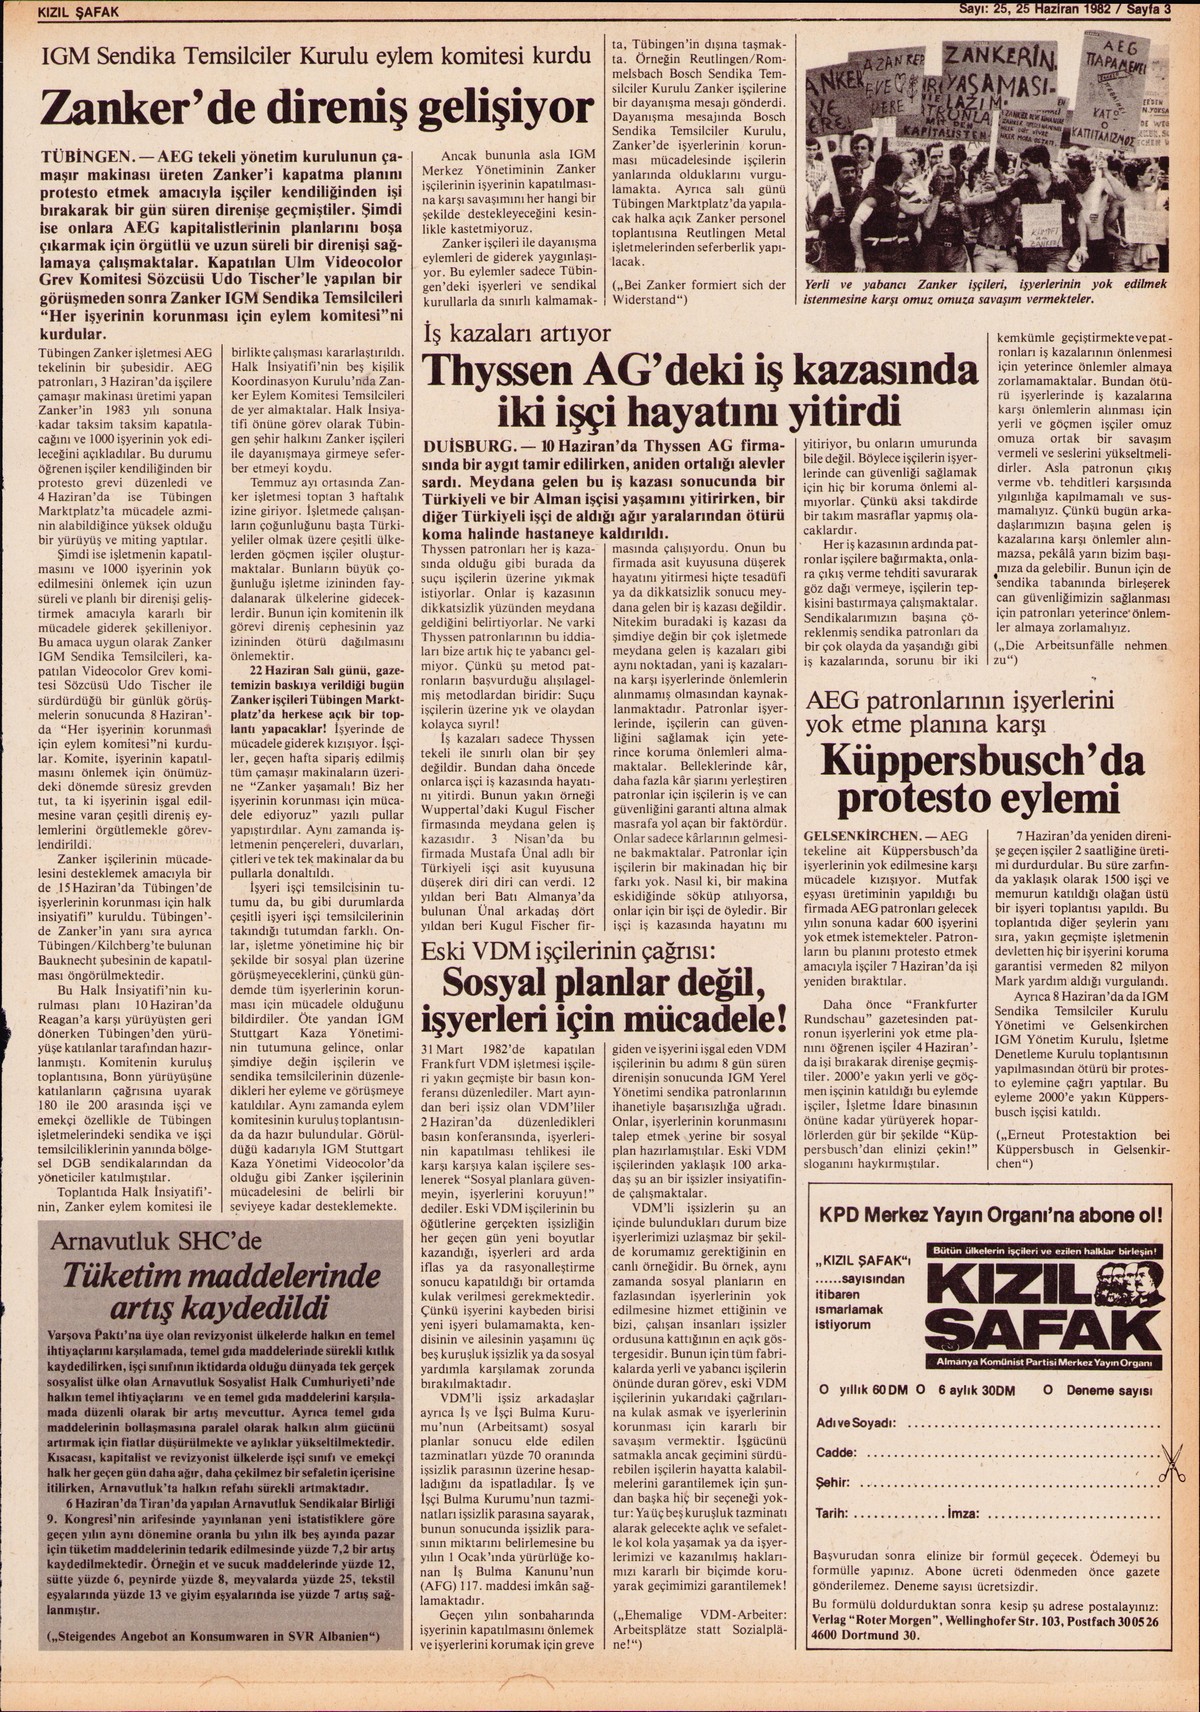 Roter Morgen, 16. Jg., 25. Juni 1982, Nr. 25, Seite 16